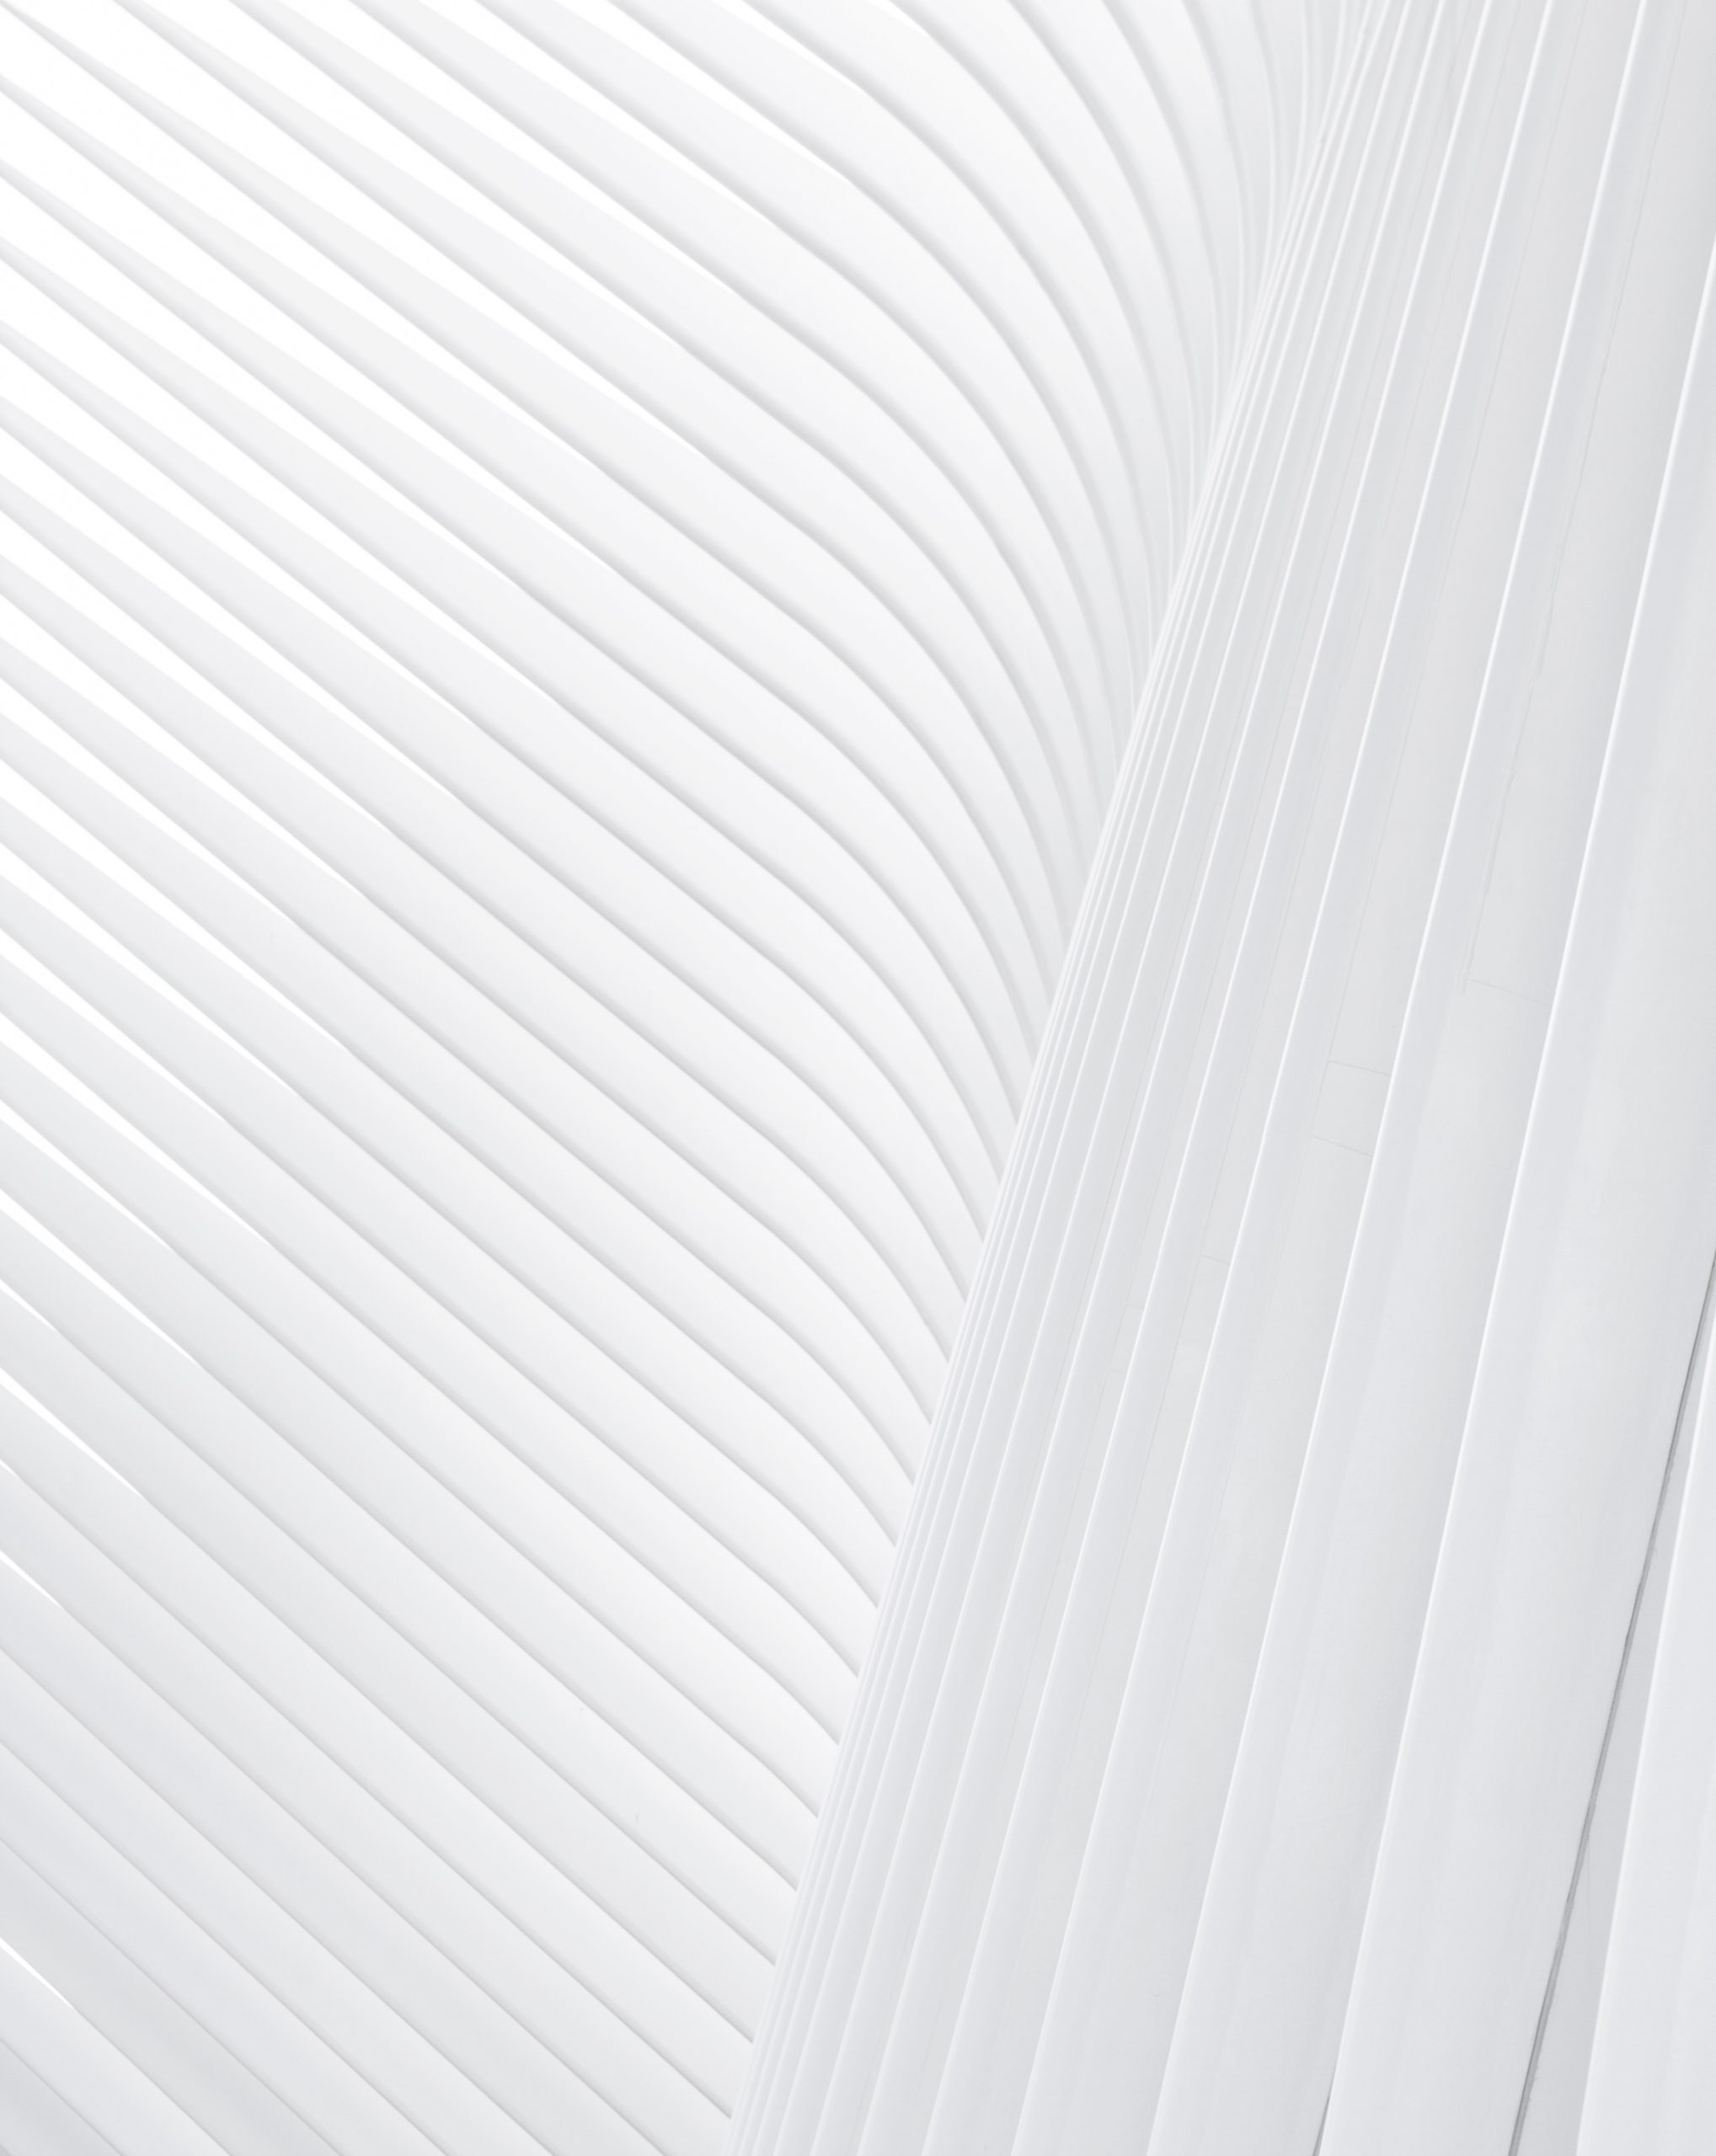 Arquitetura wallpaper, White stripe pattern